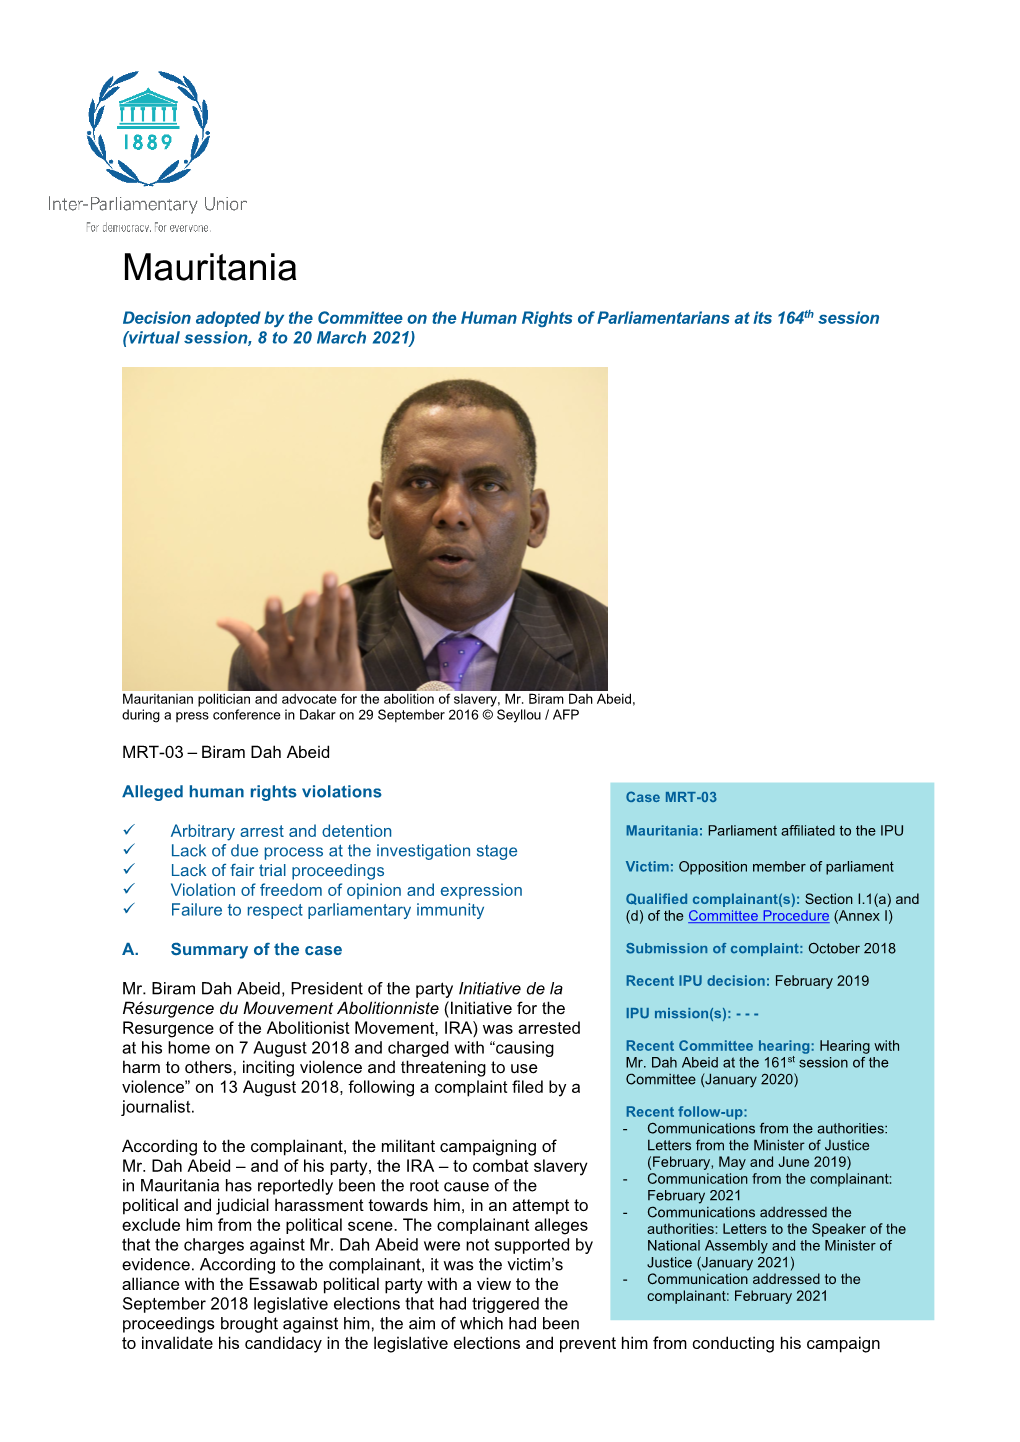 Human Rights Decision: Mauritania March 2021 (Abeid)